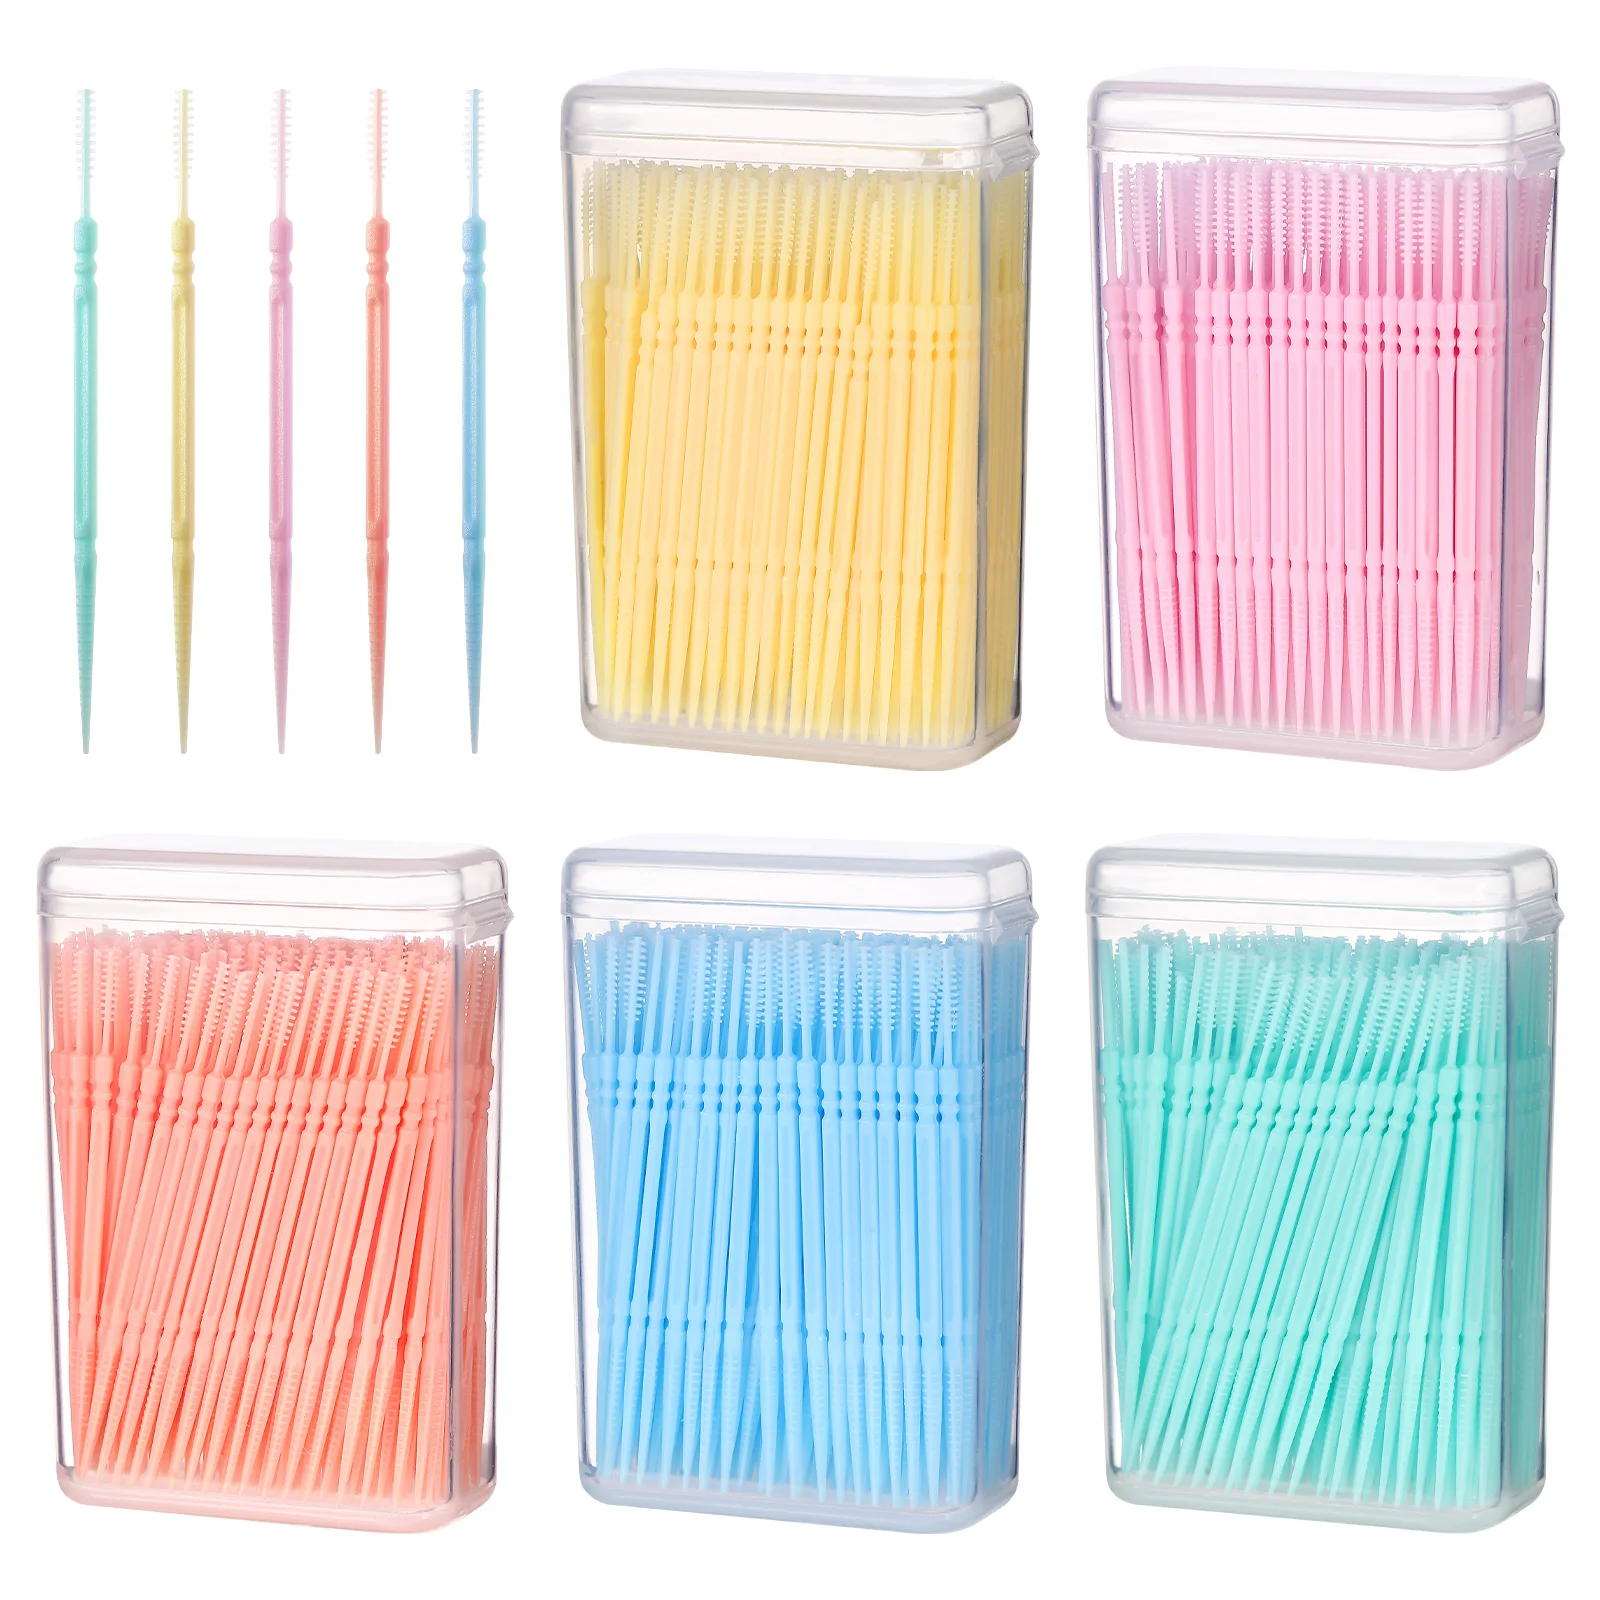 

1100pcs Disposable Plastic Toothpicks Double-head Oral Care Interdental Floss Cleaners plastic Toothpicks thread(Random Color)